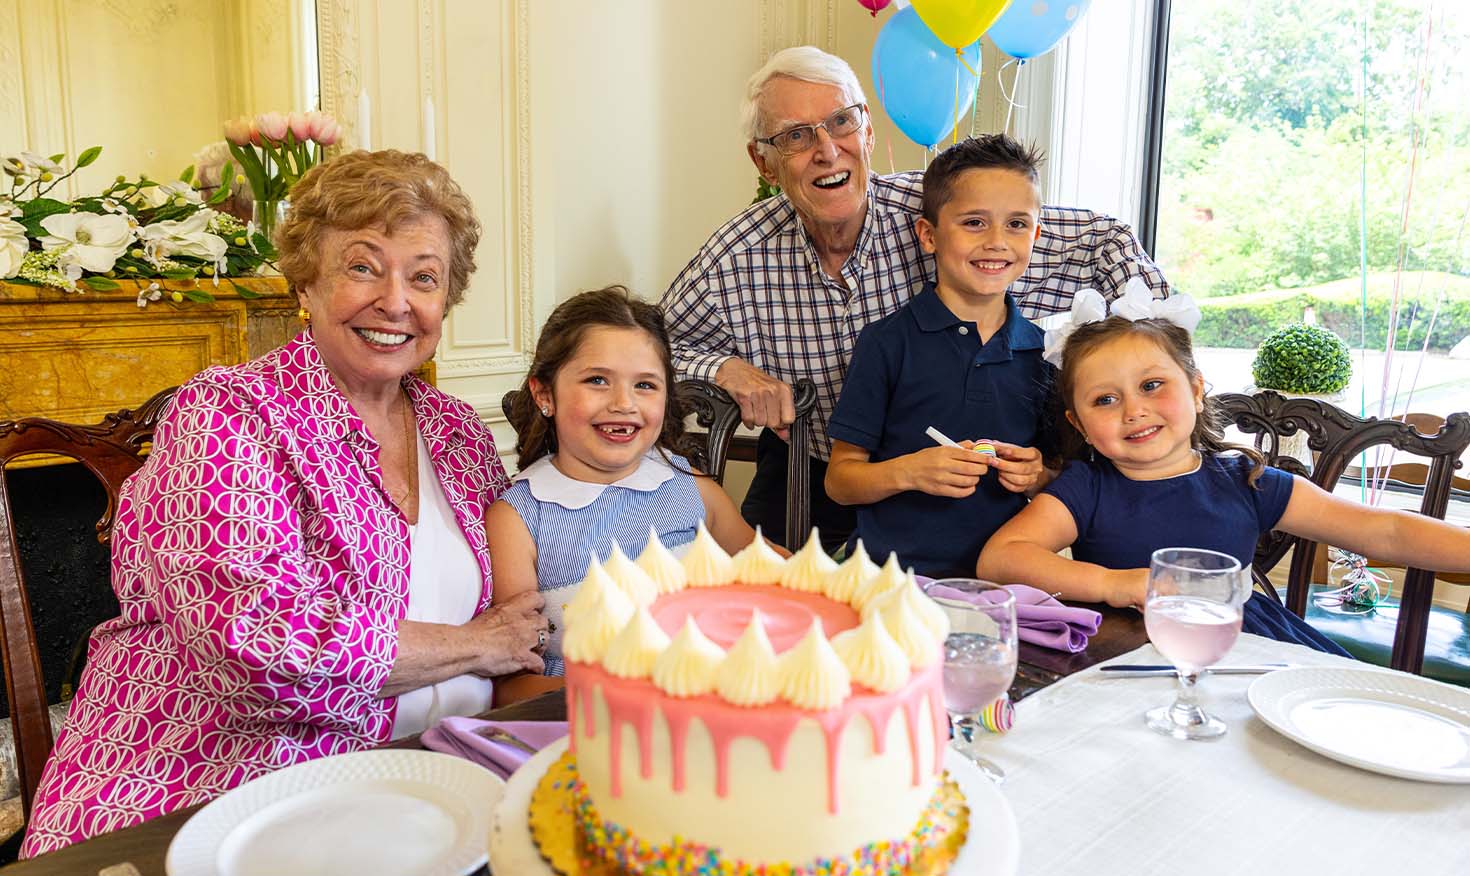 Senior grandparents celebrating a birthday with their three grandchildren